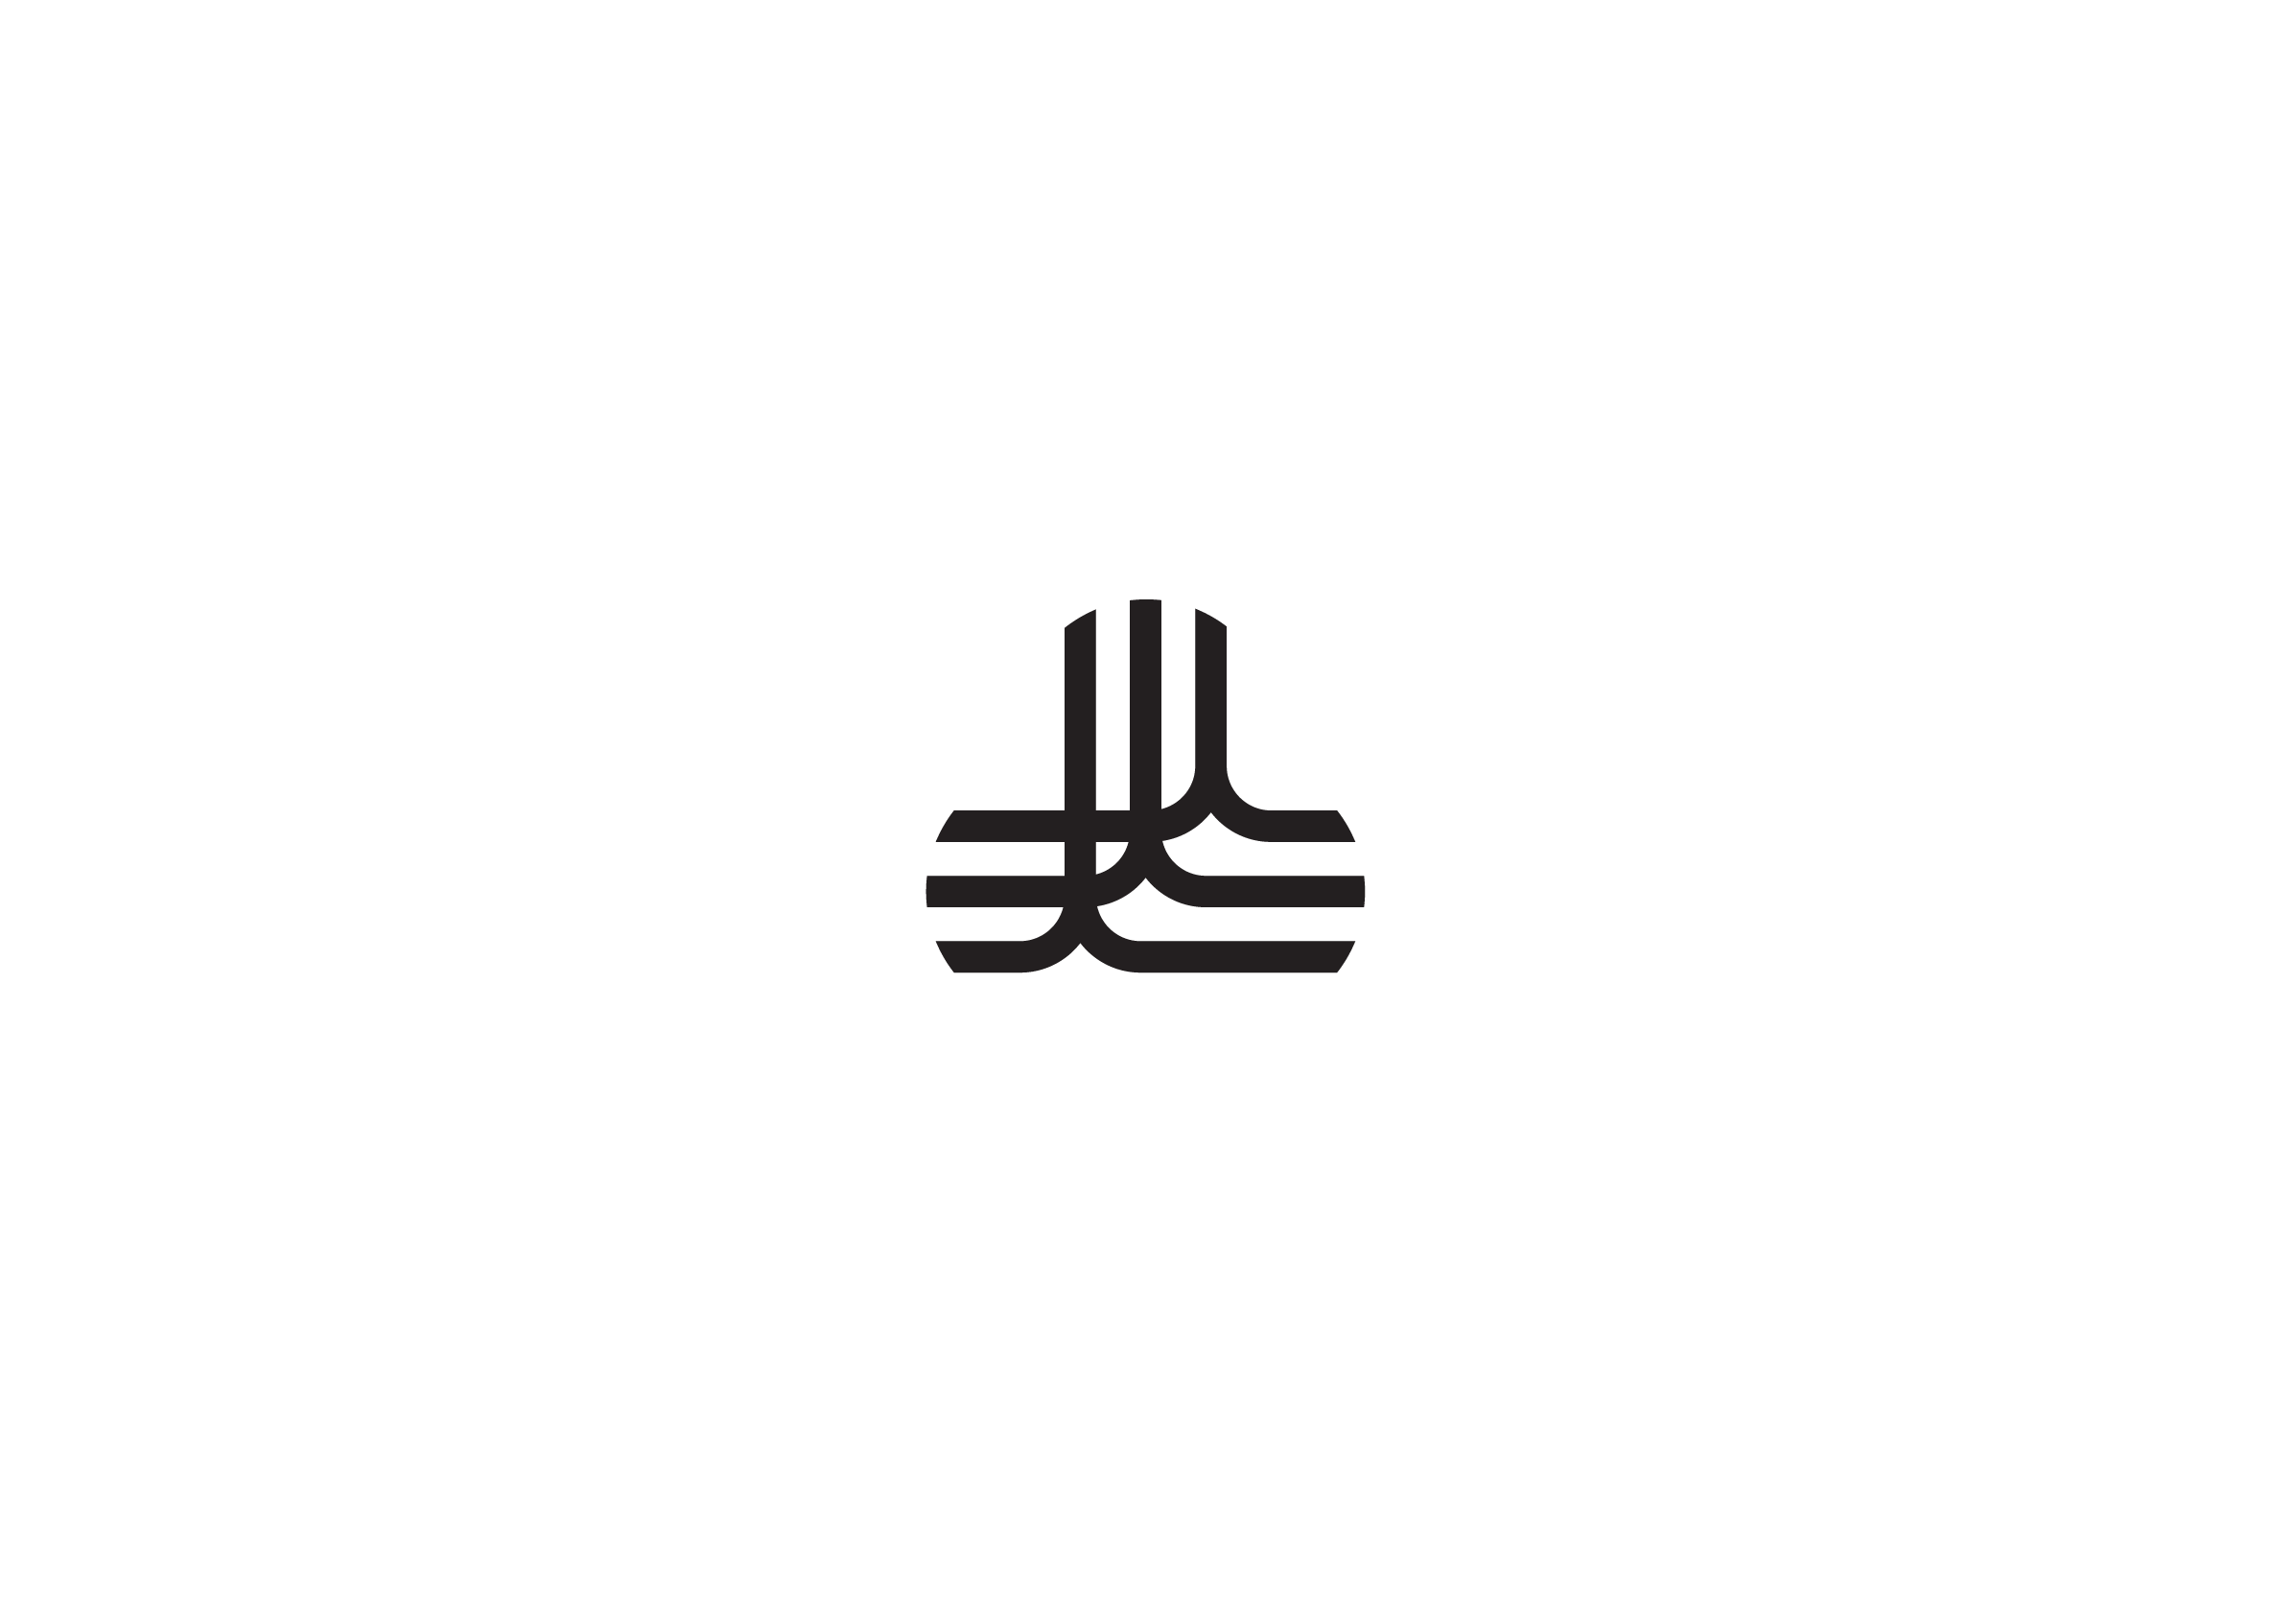 Alternative logo concept for Confluence Architecture by Ottawa graphic designer idApostle